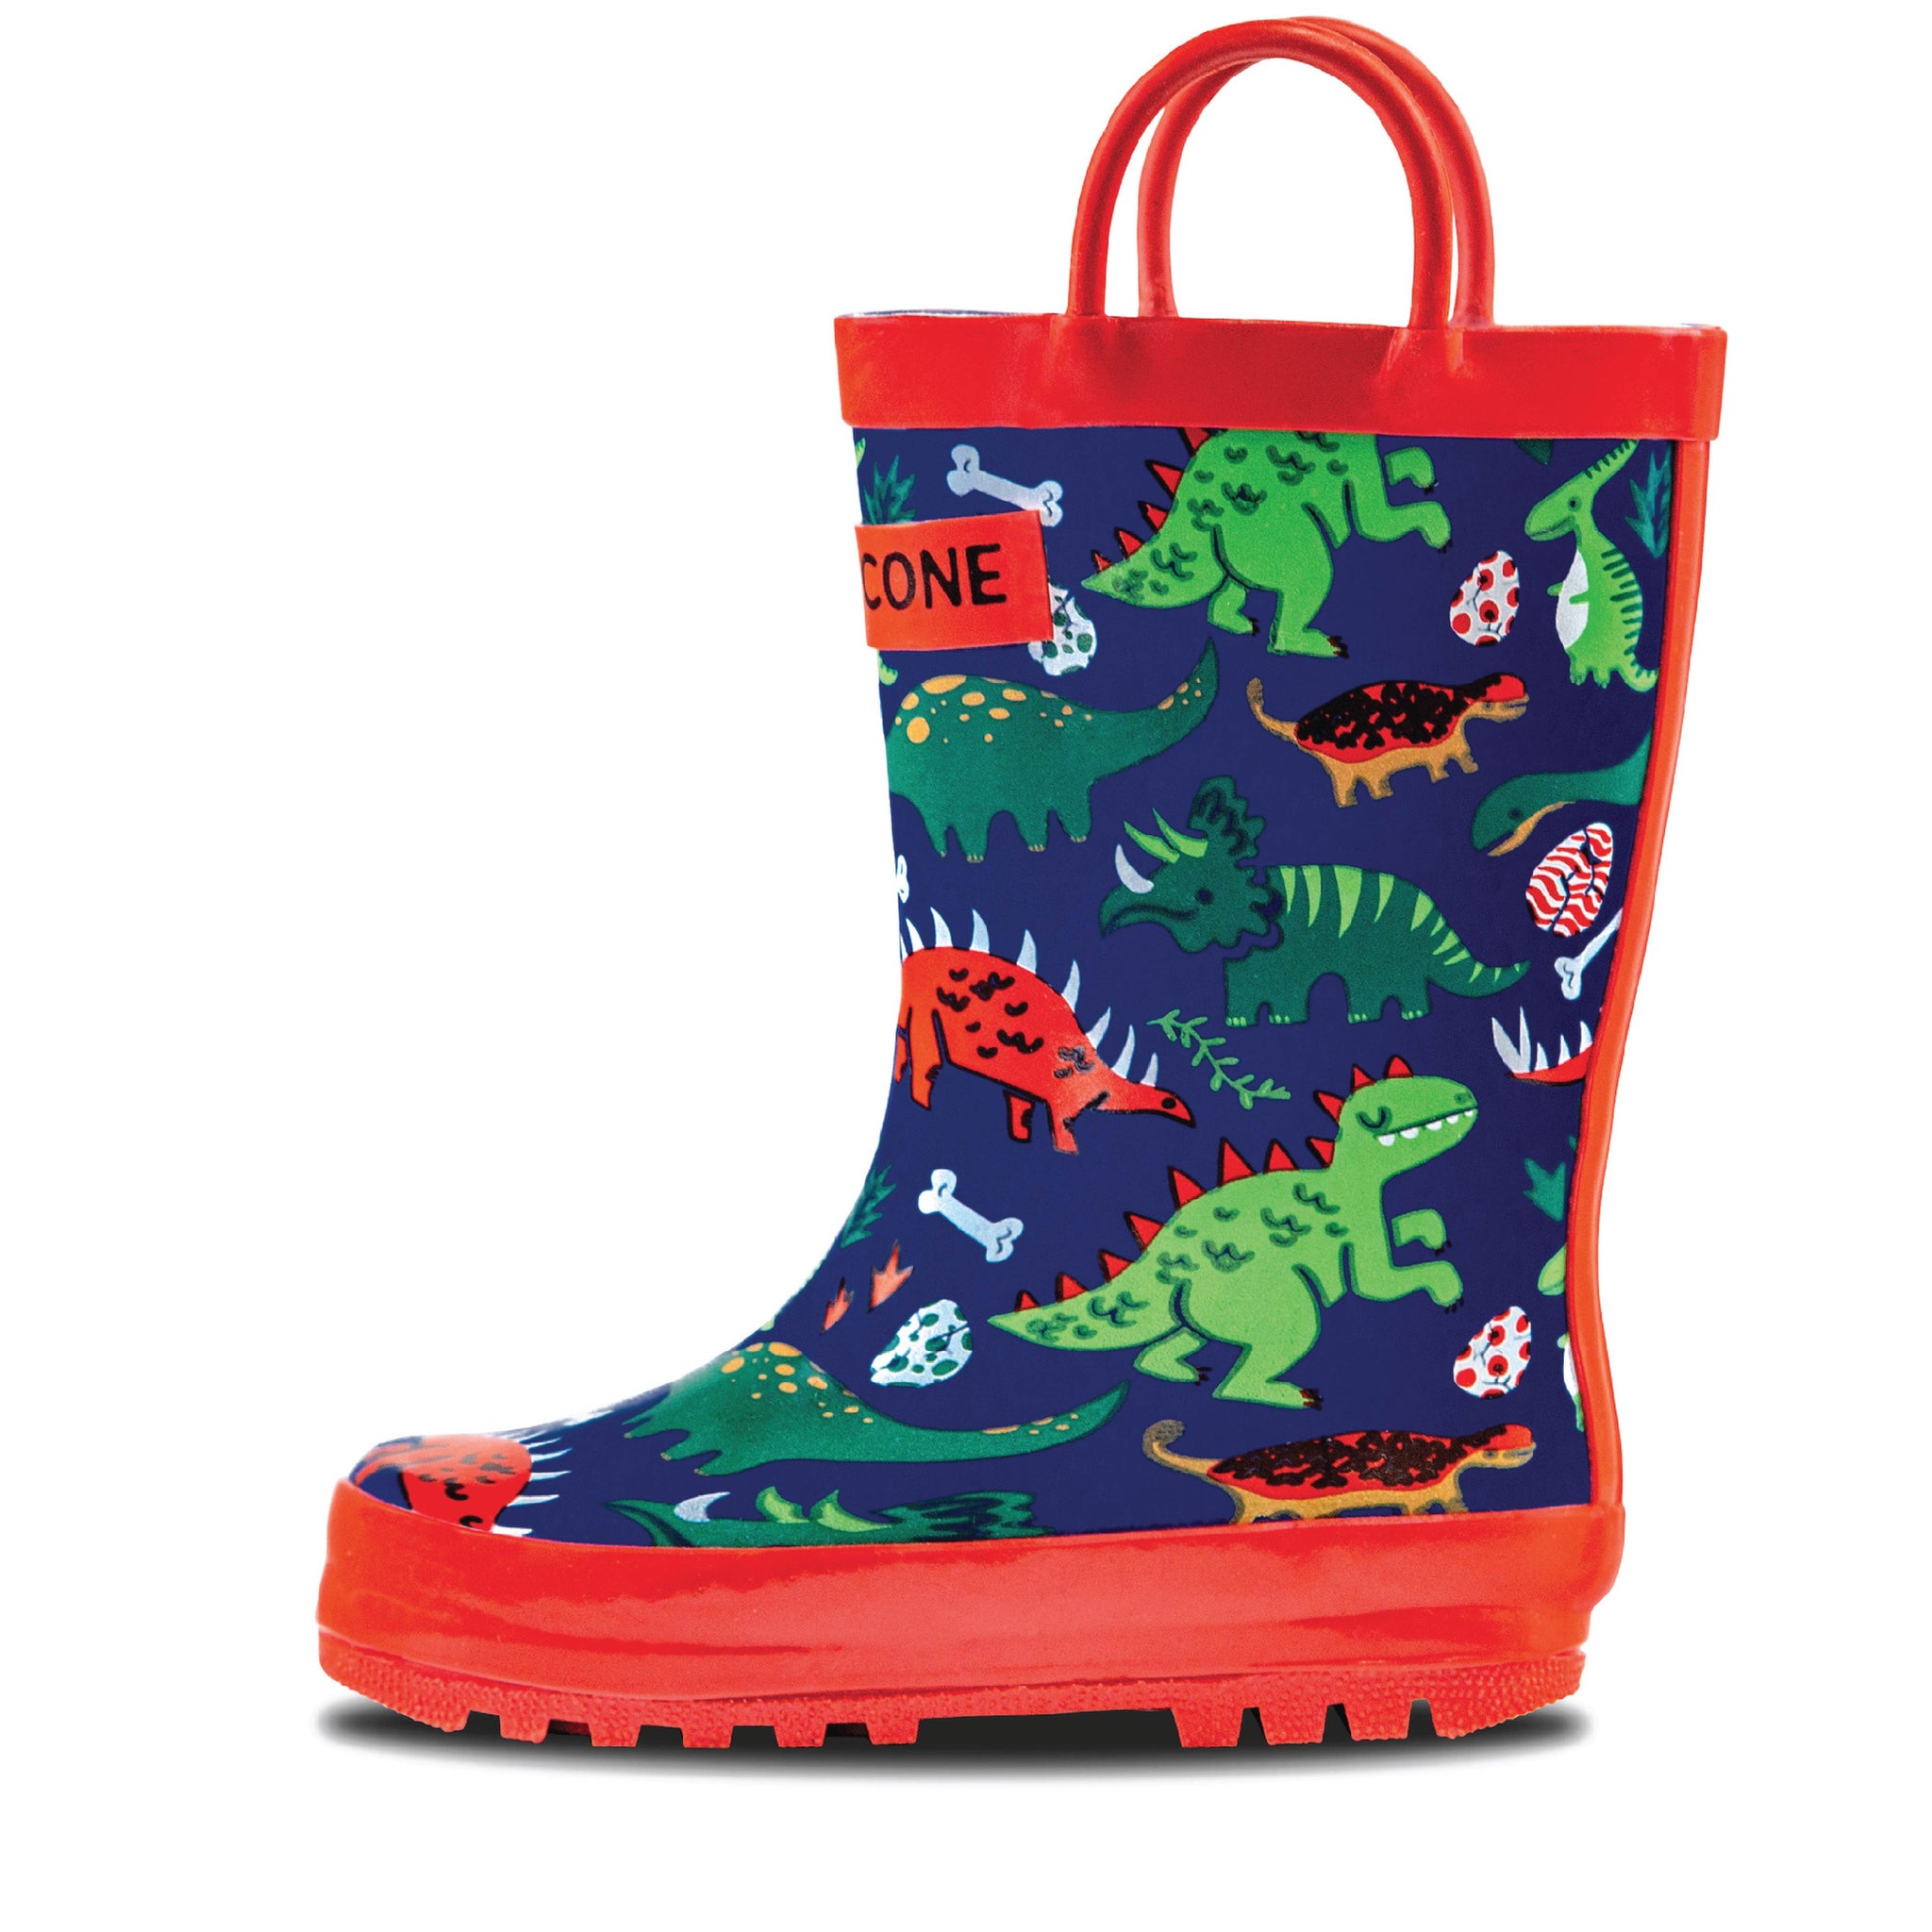 LONECONE Dinosaur Rain Boot